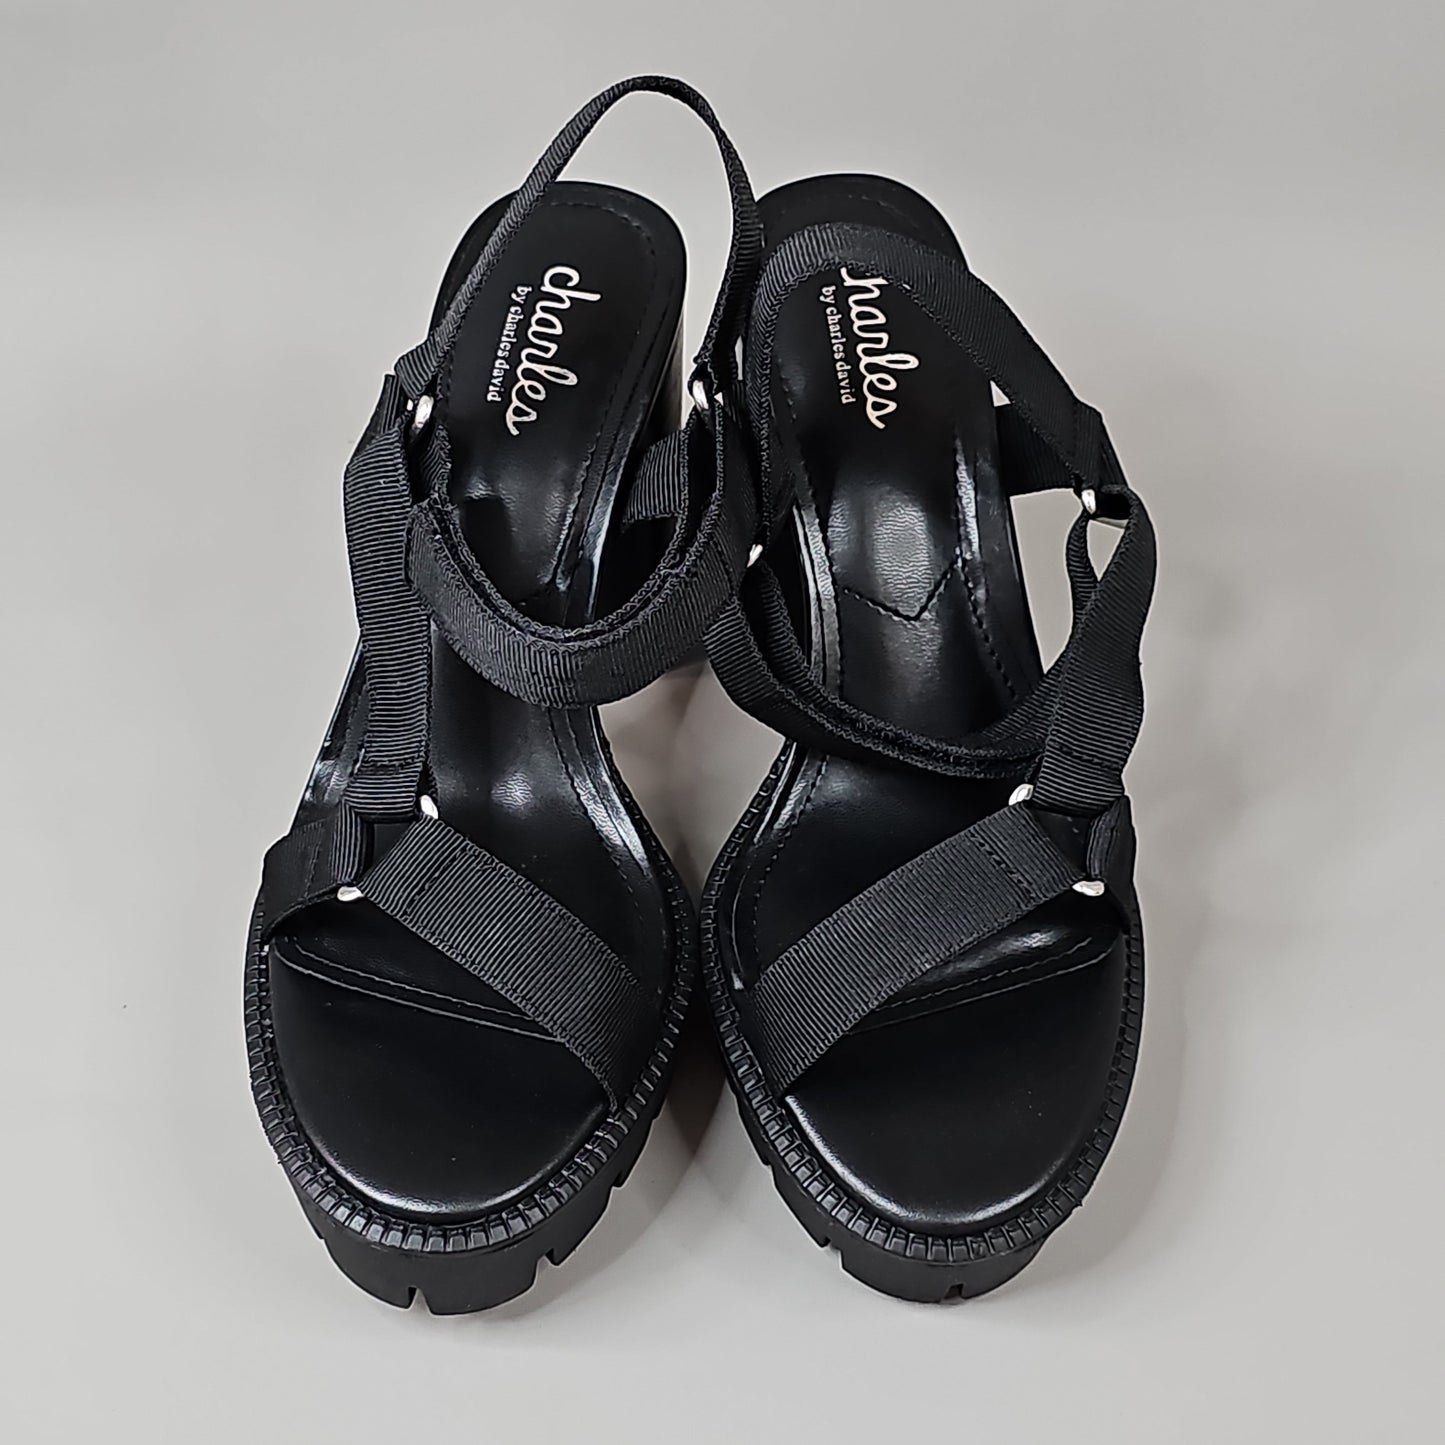 CHARLES BY CHARLES DAVID Women's Vast Sport Sandal Shoe Sz 10 M Black (New)